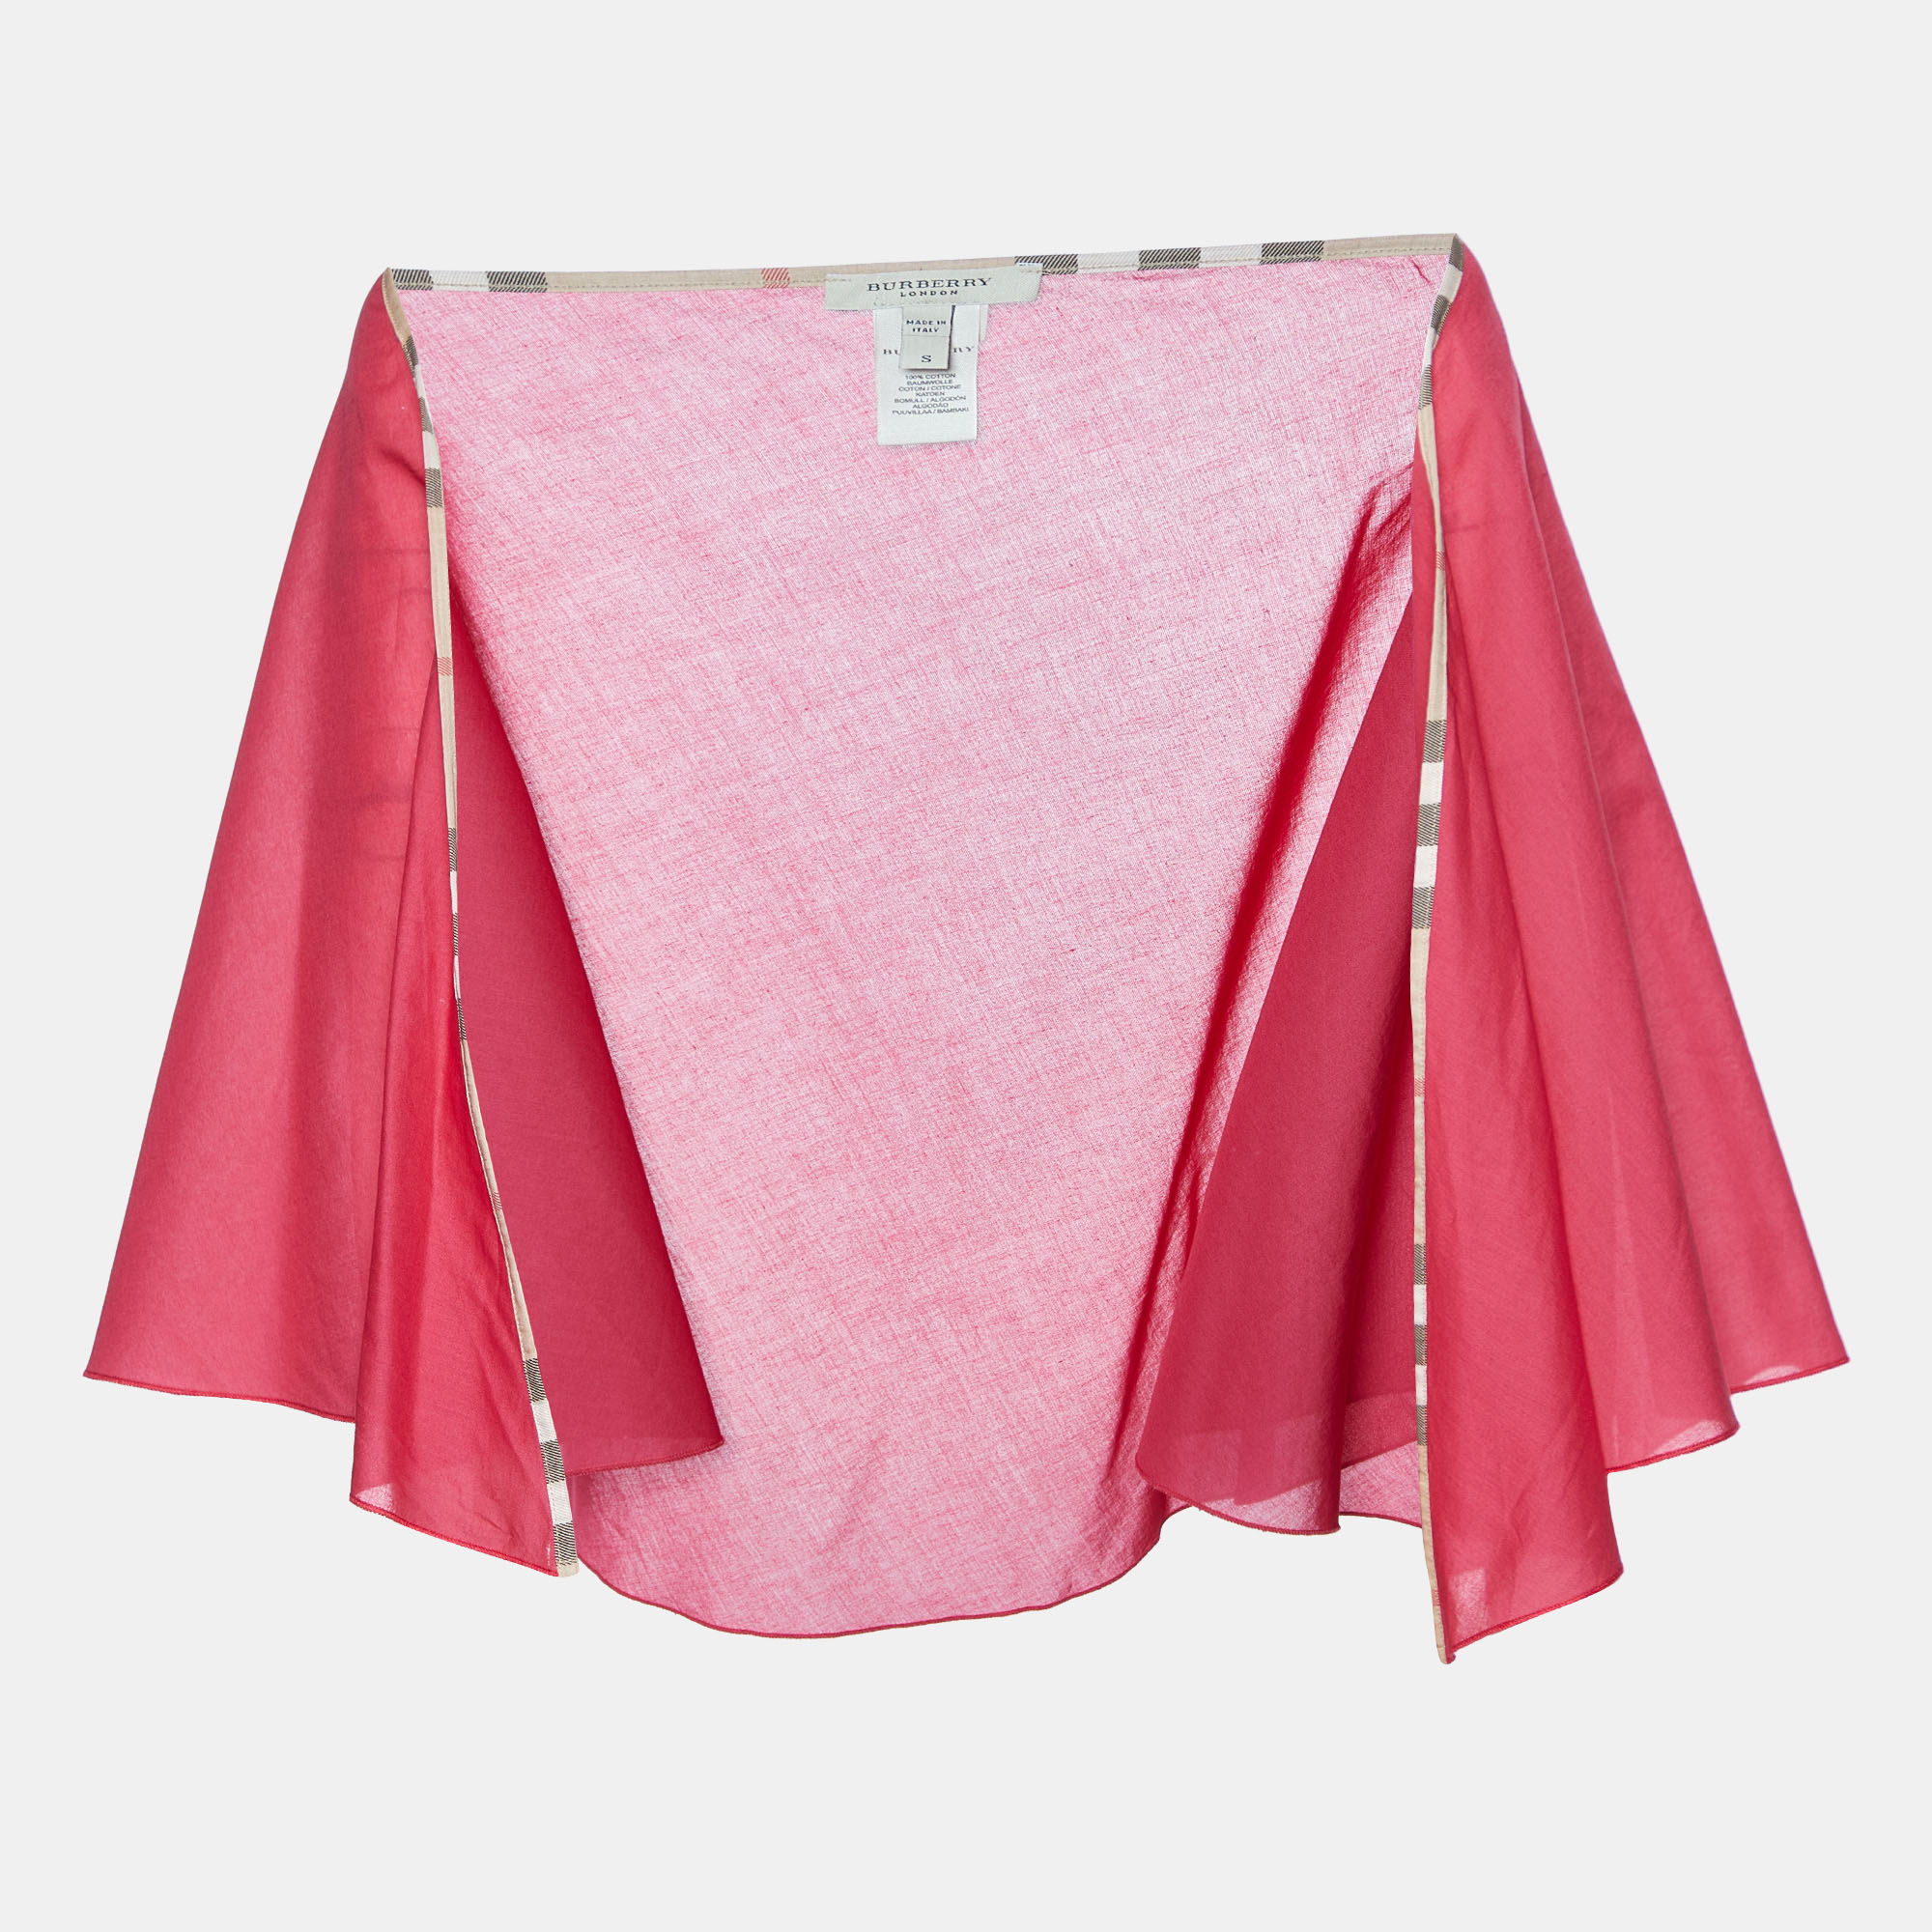 Burberry coral pink cotton sarong s